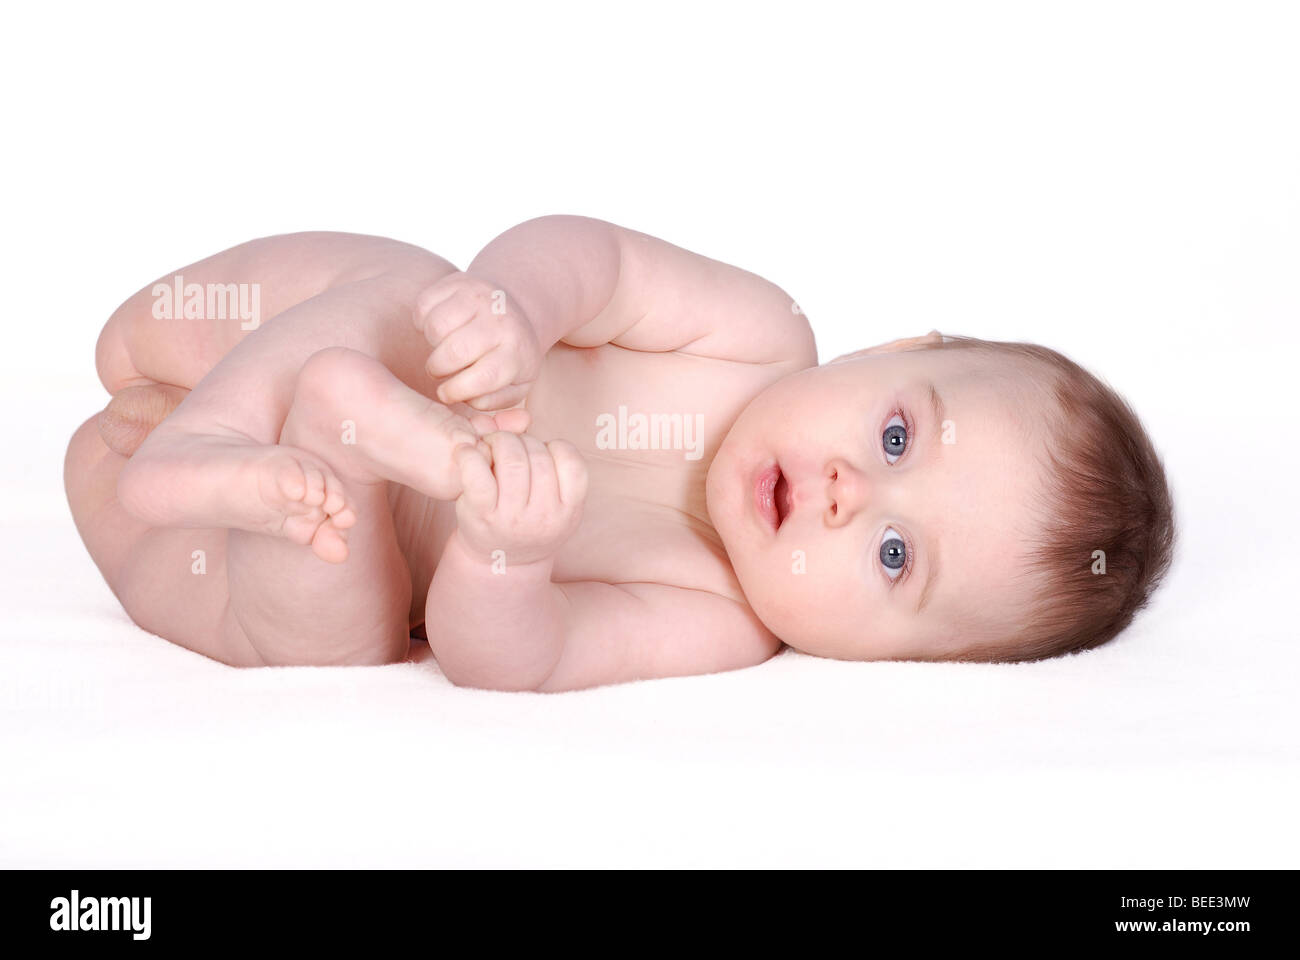 Laying baby on white background Stock Photo